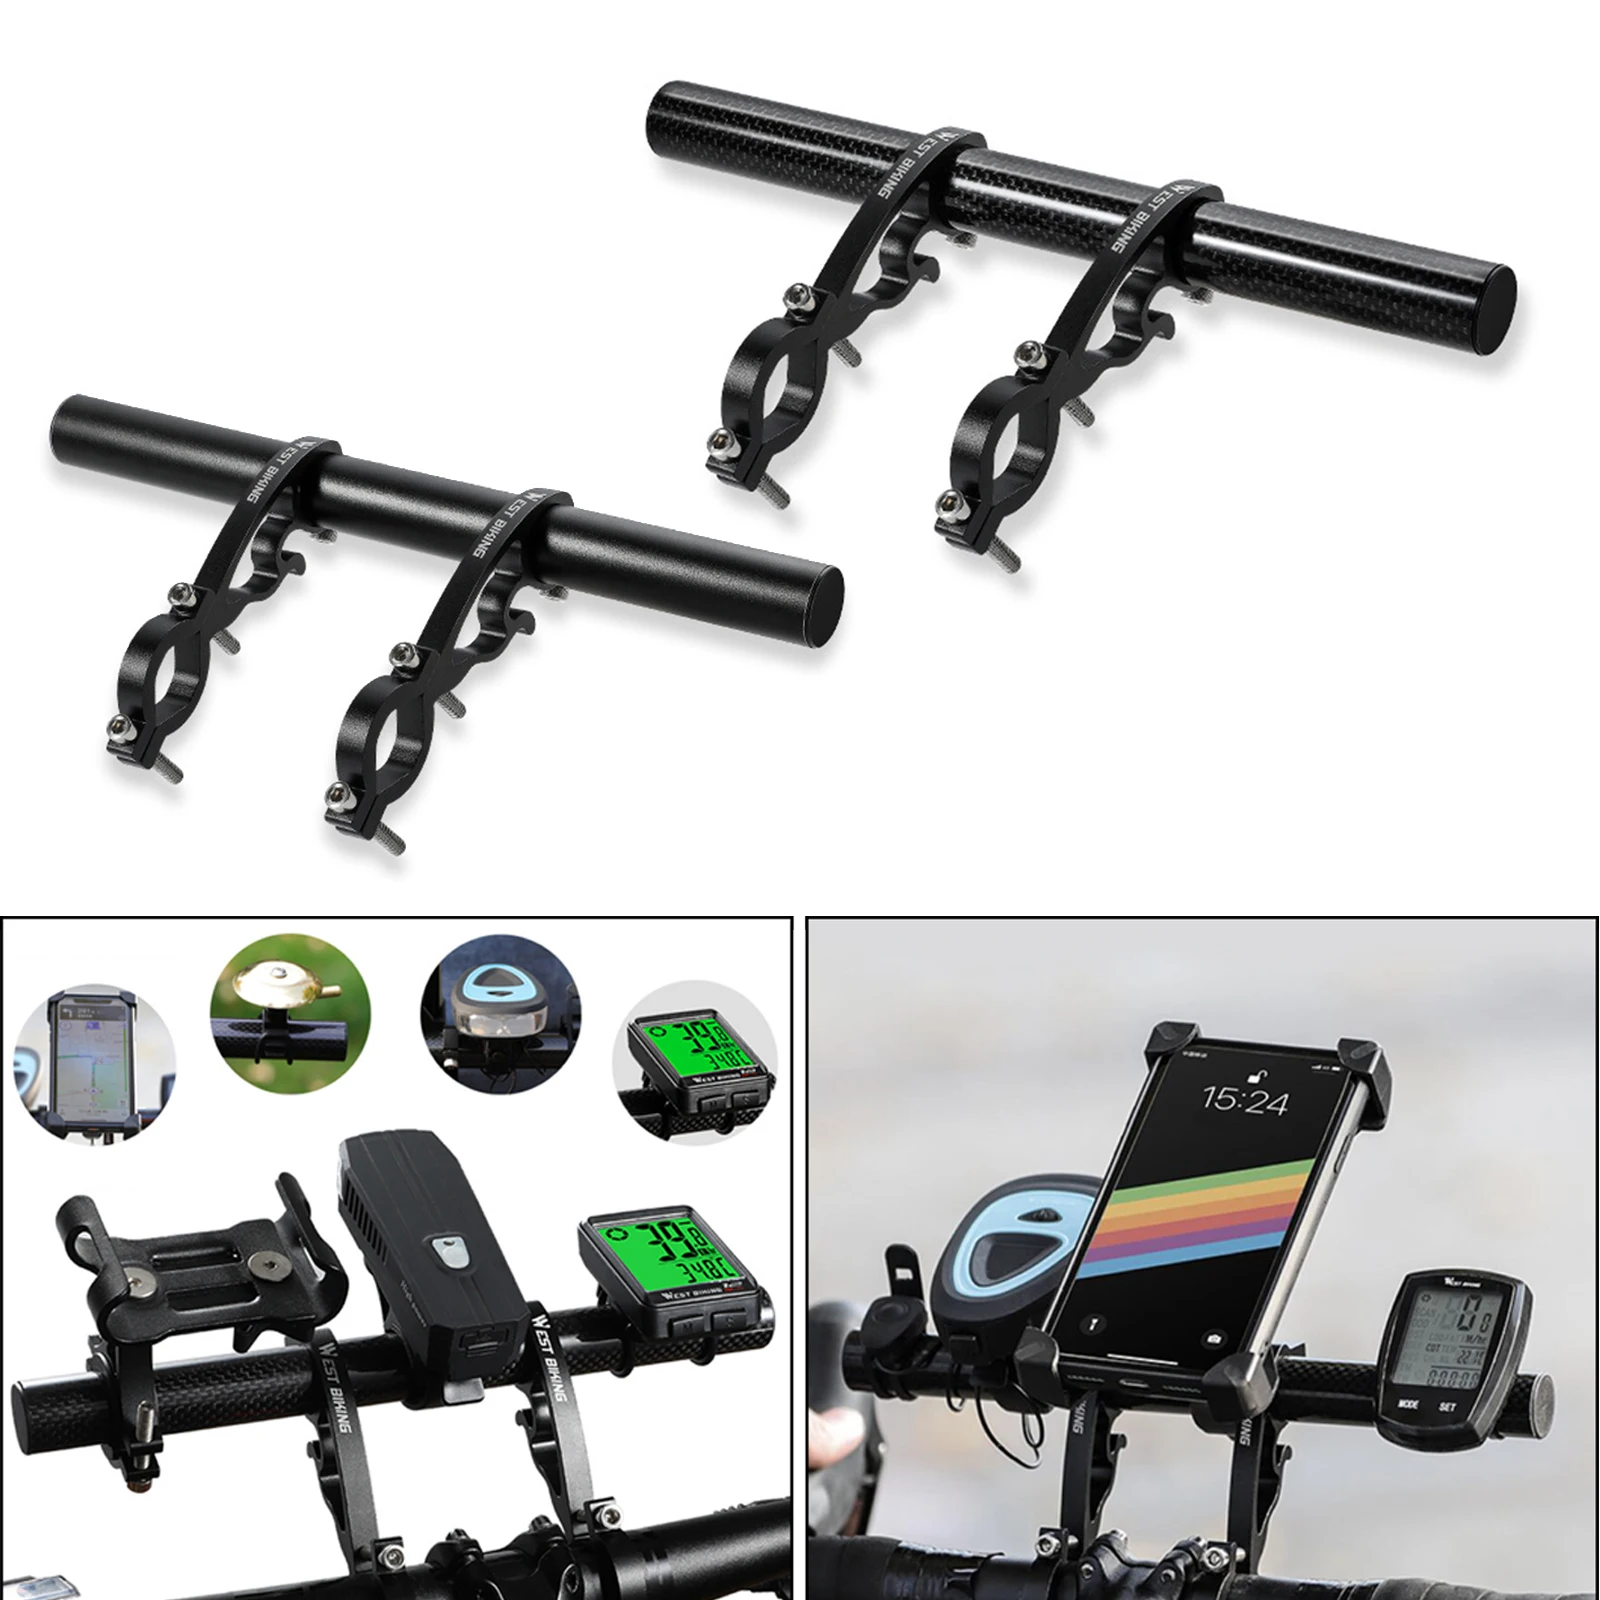 MTB Bike Handlebar Extender, Road Bicycle Handlebar Extension Bracket Holder for Lights Speedometer GPS Phone Mount Rack